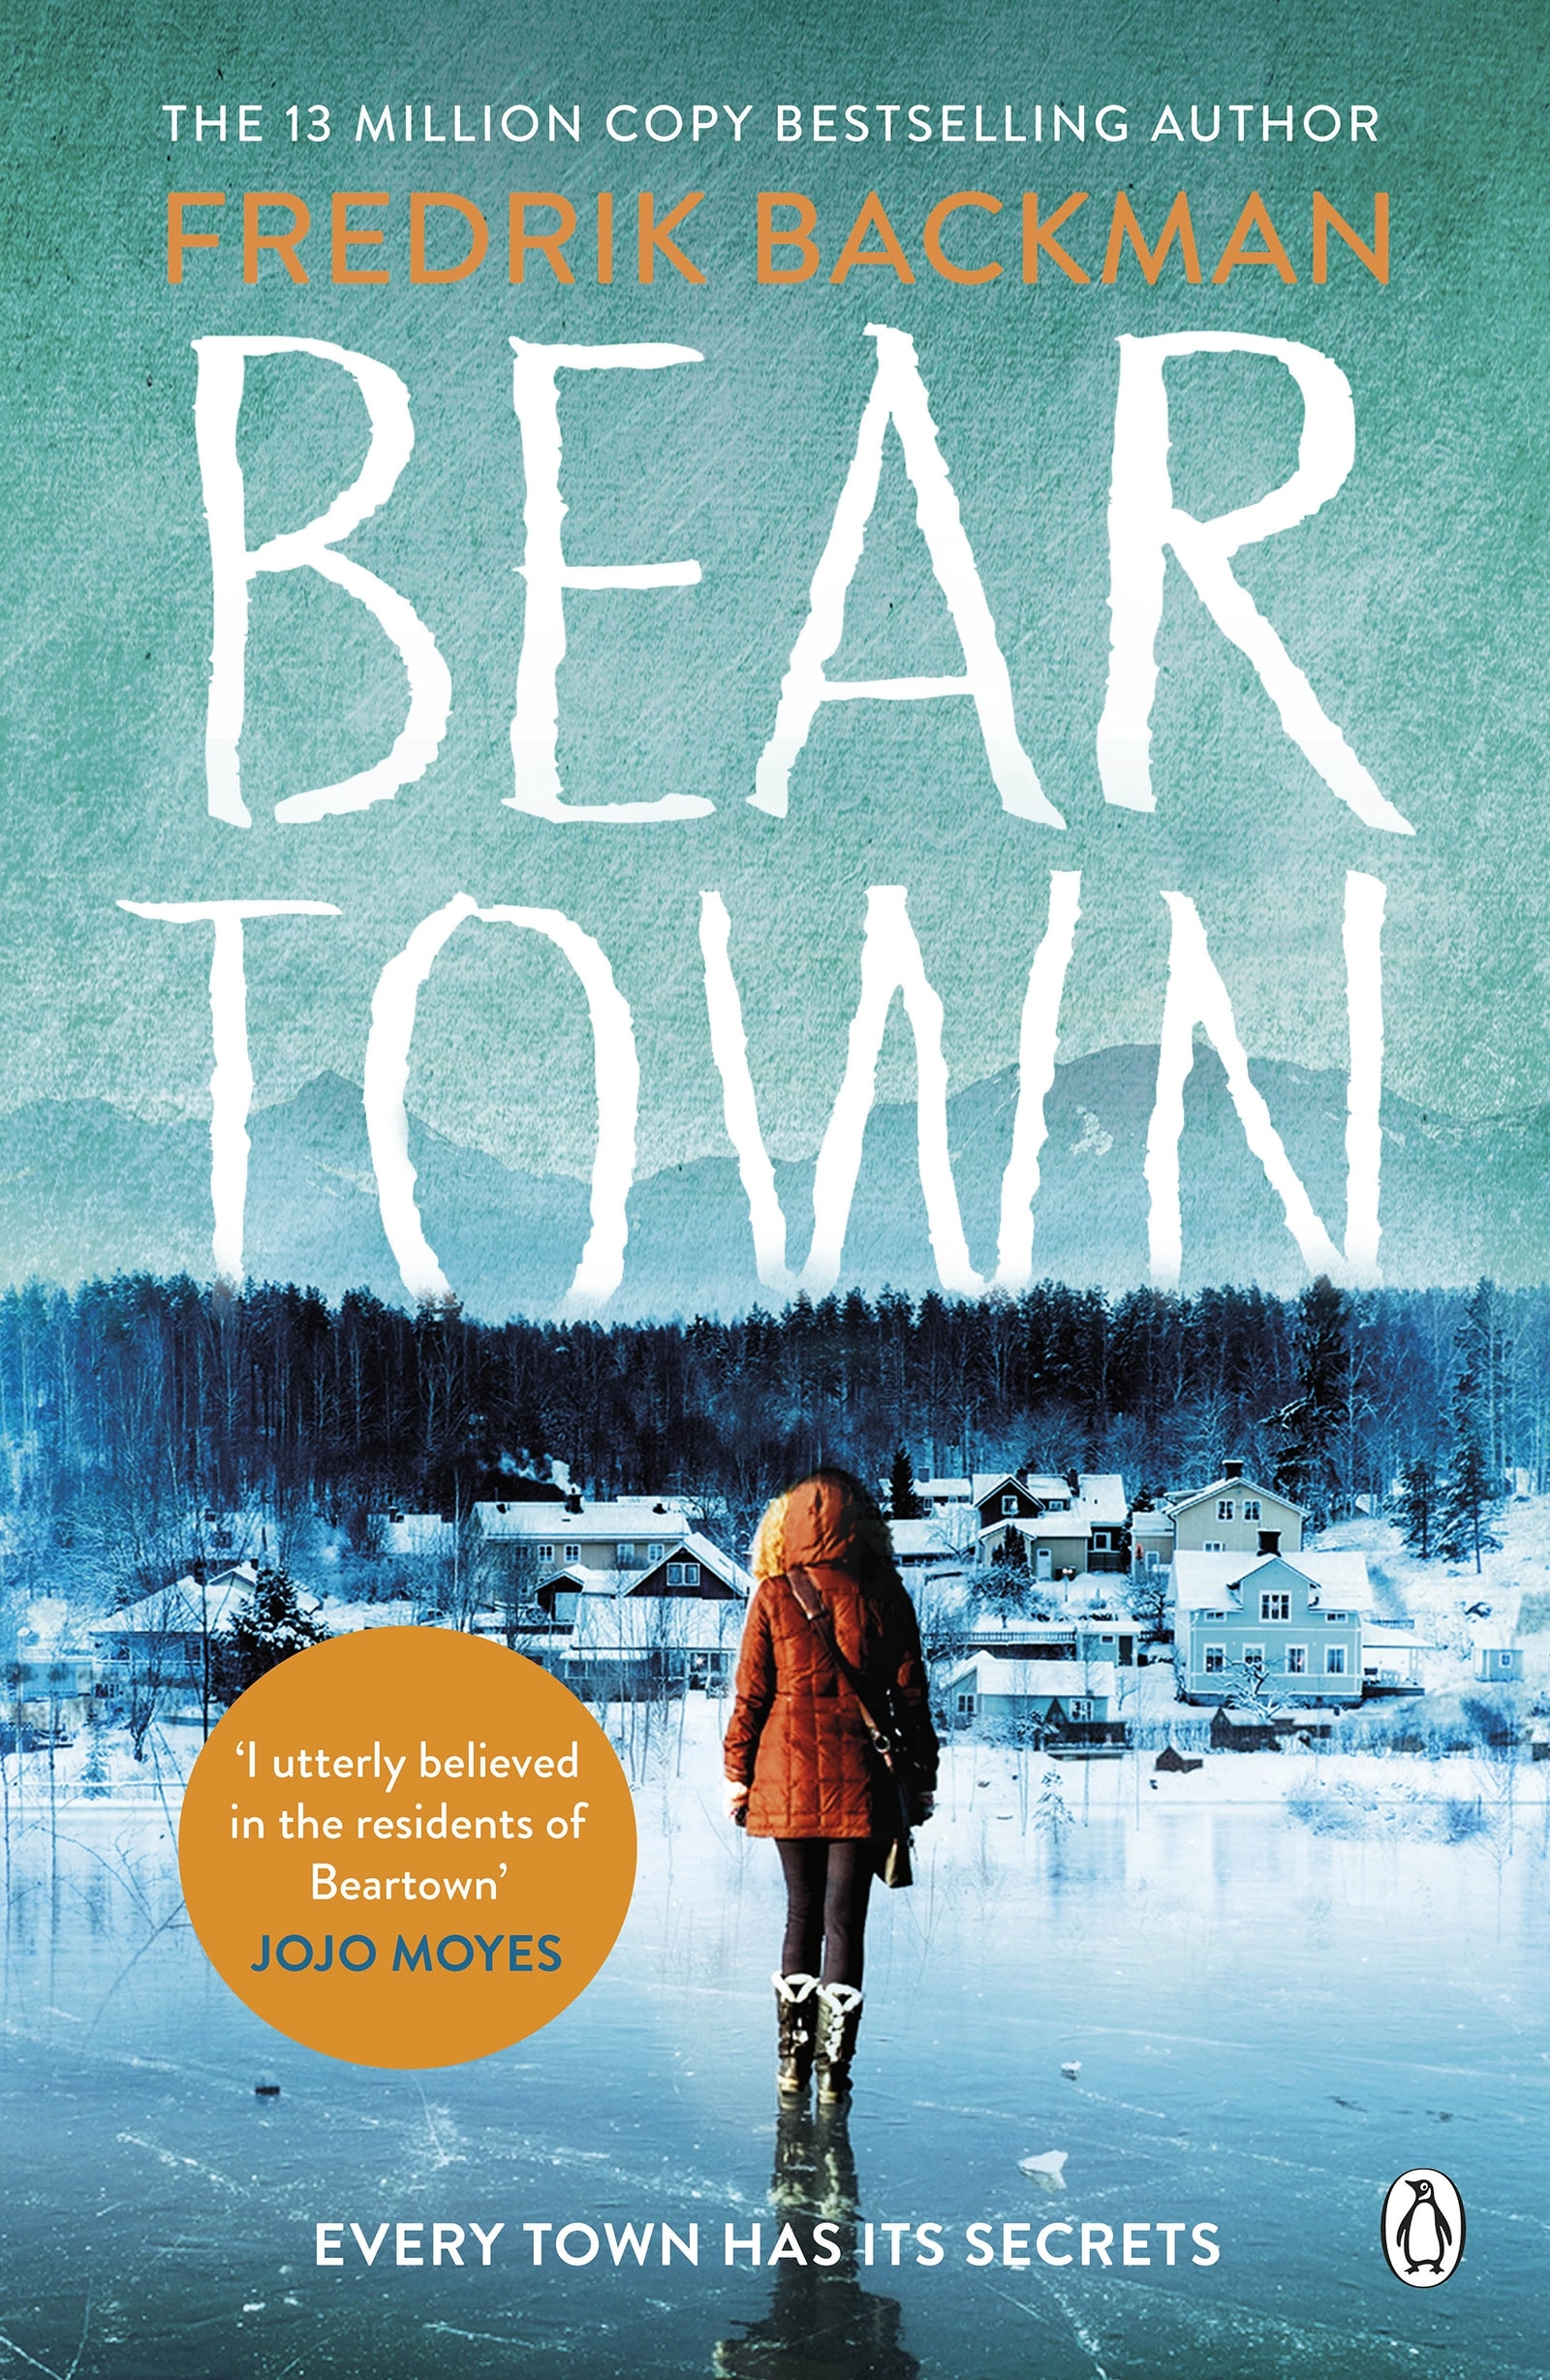 Book “Beartown” by Fredrik Backman — May 3, 2018